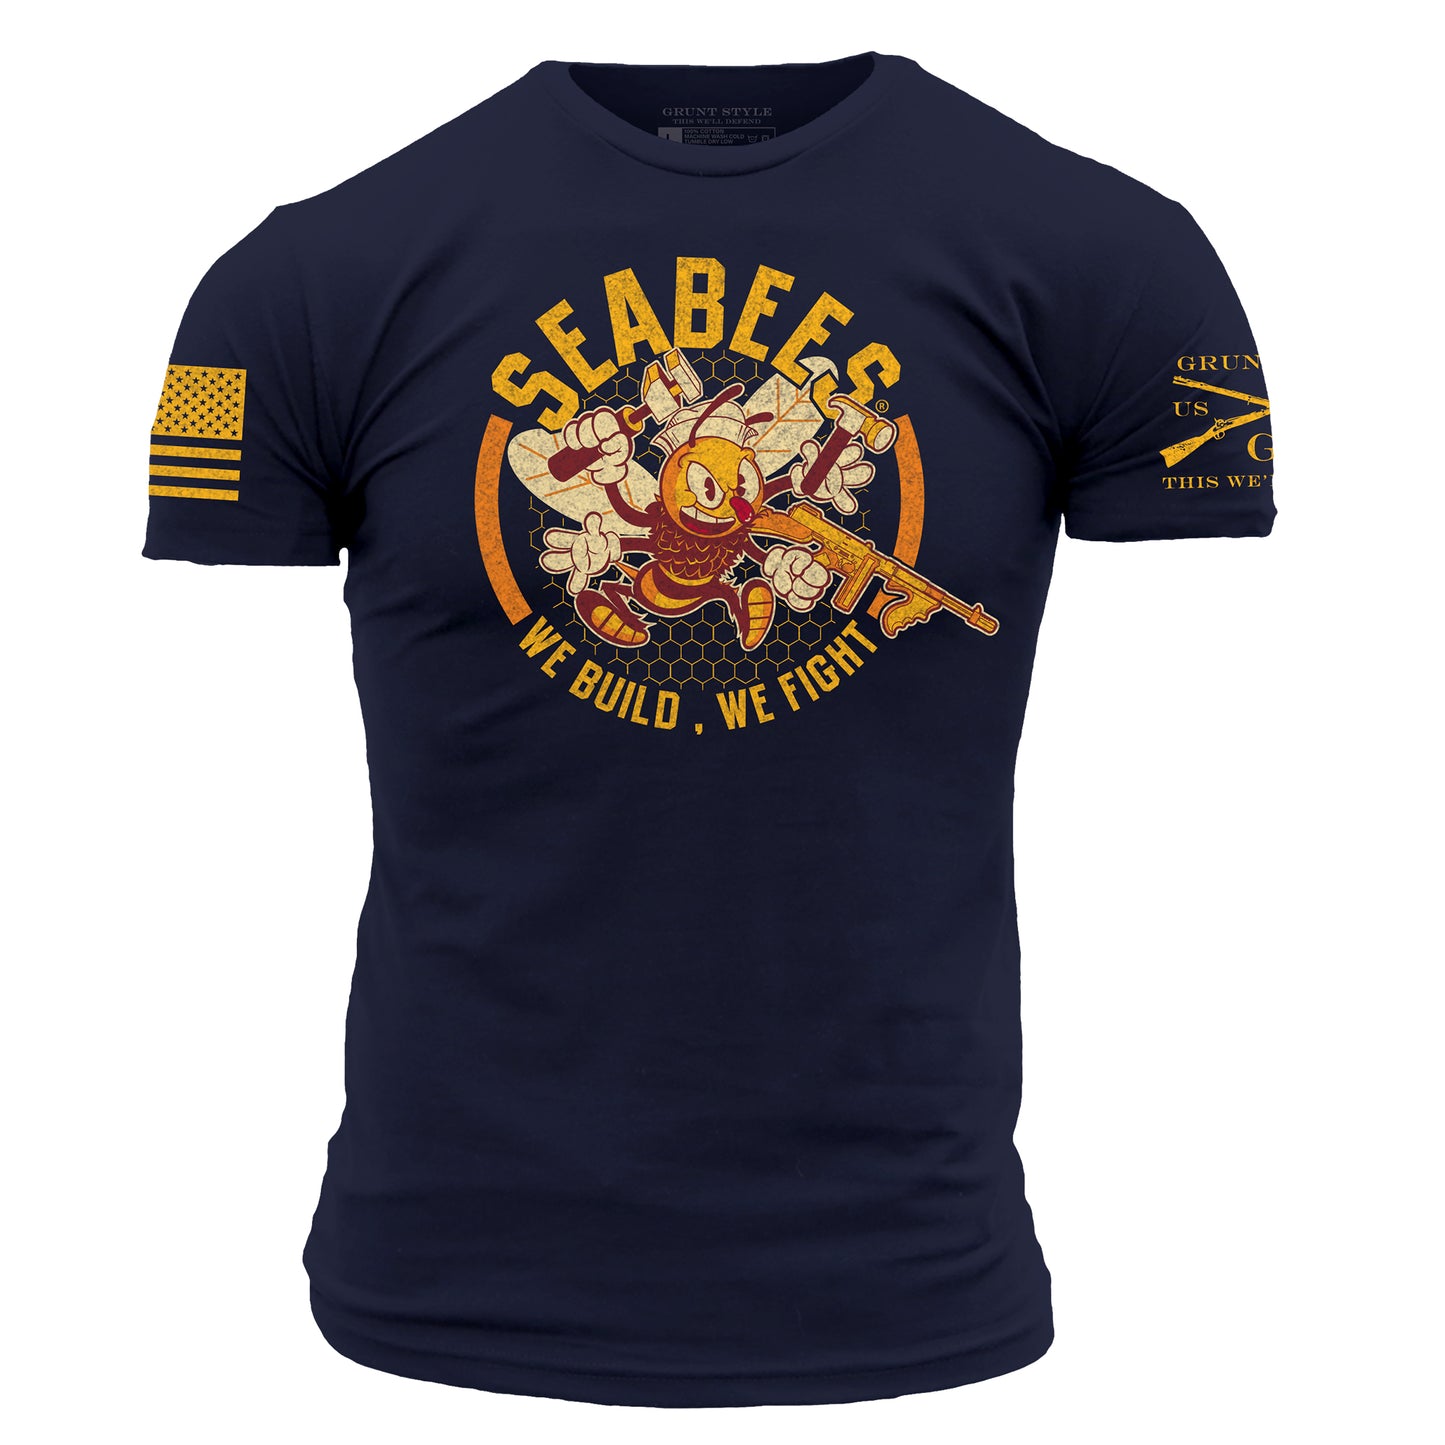 Military Shirt - United States Navy T-Shirt 